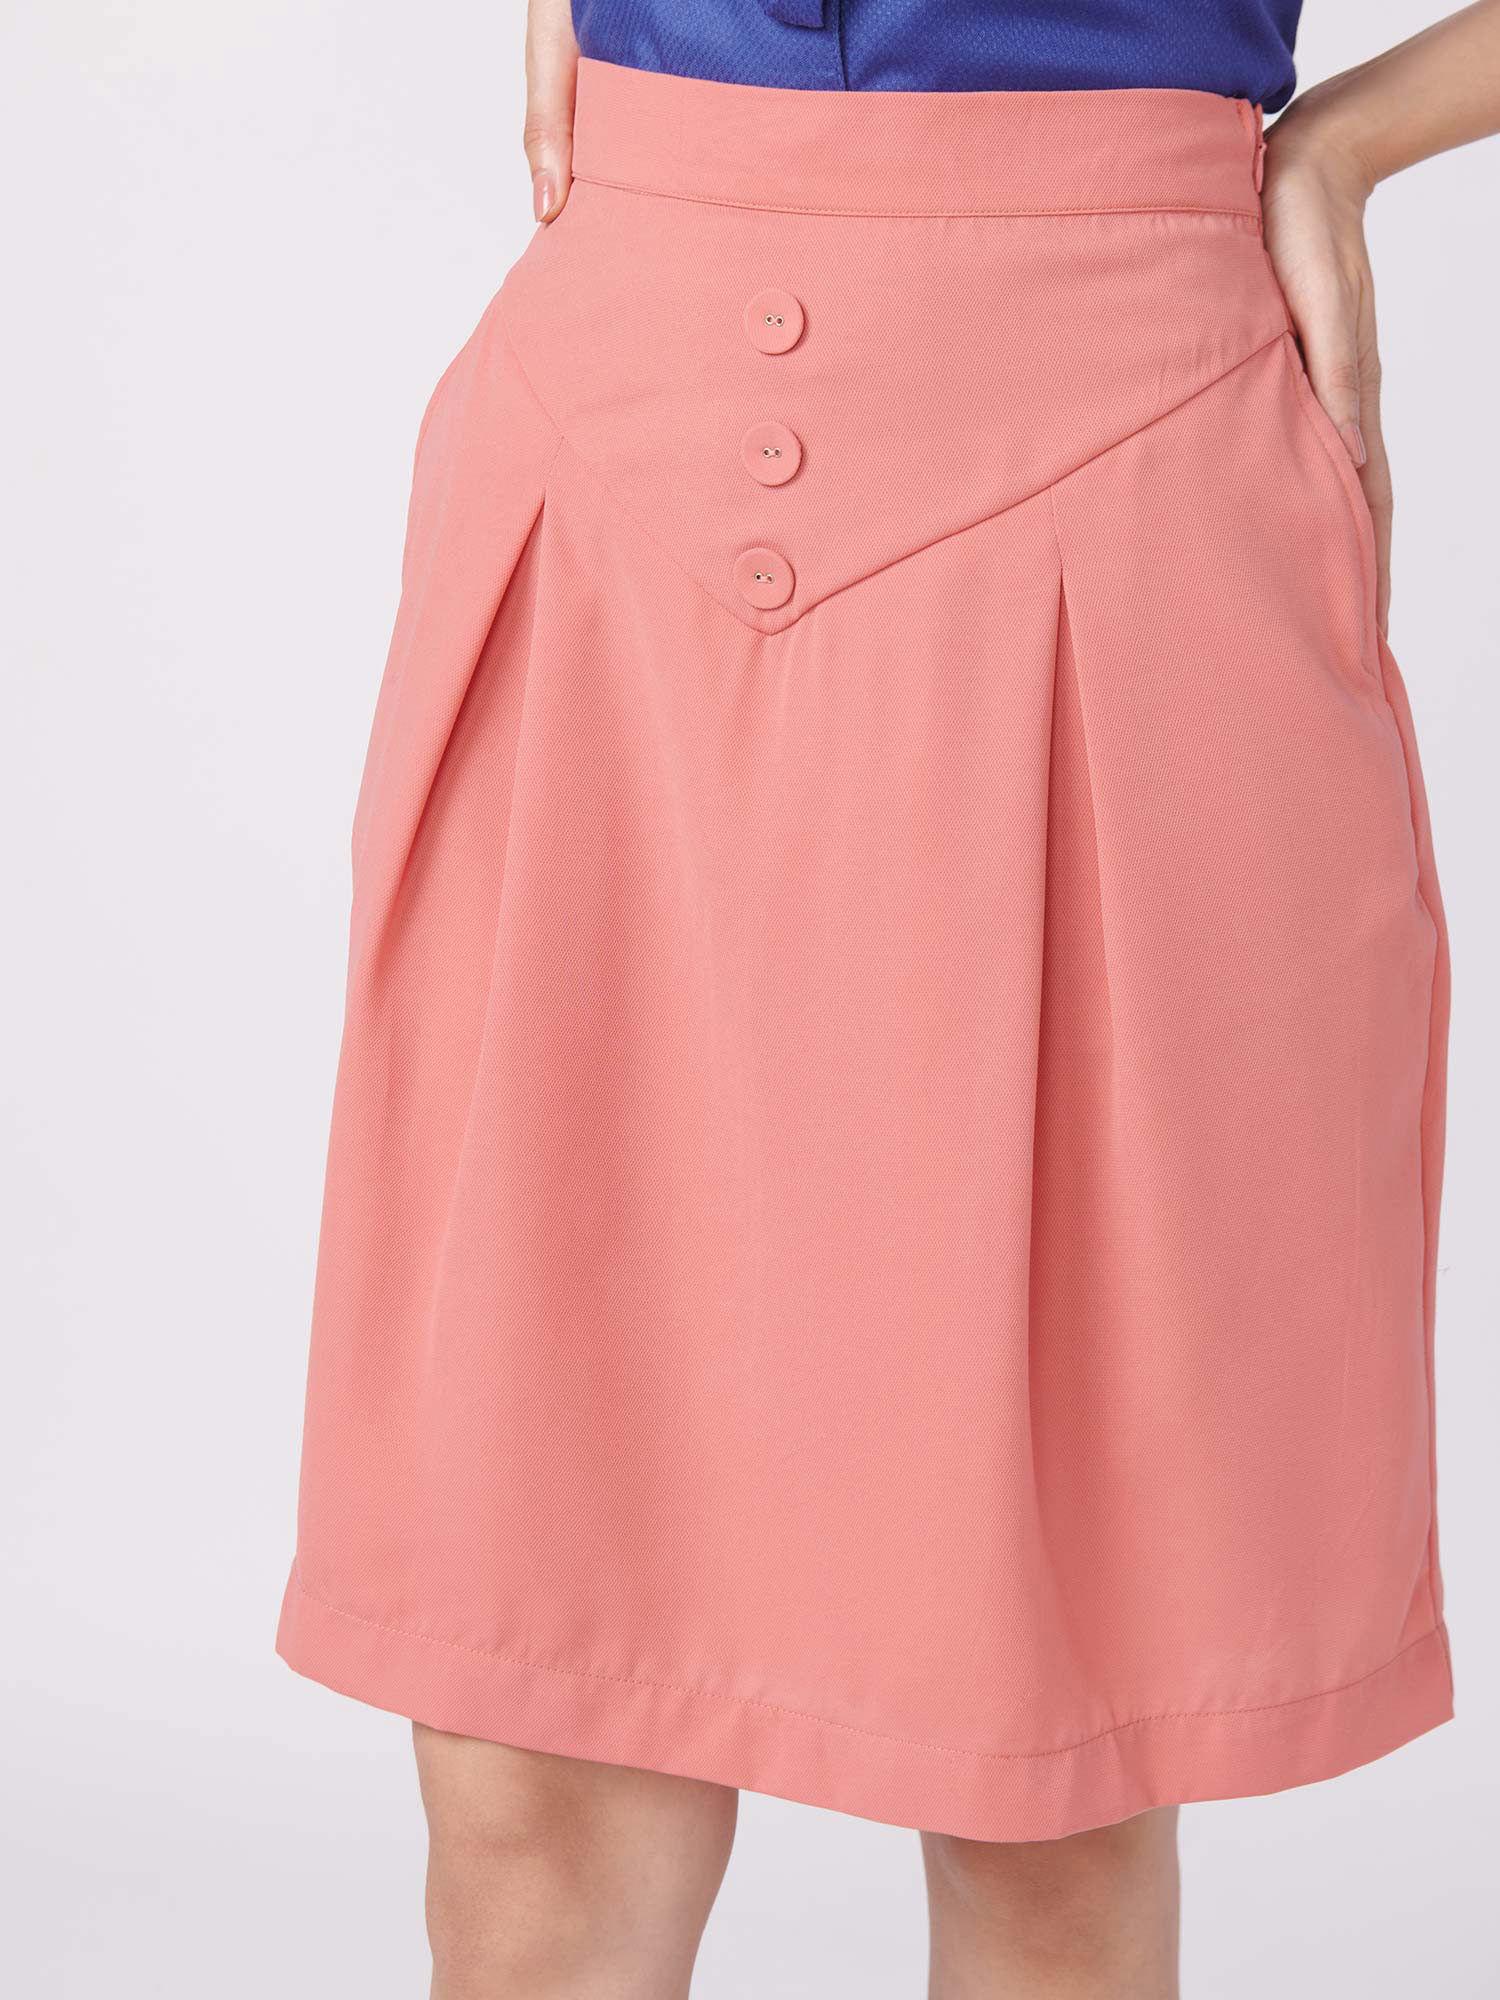 light pink box pleat skirt